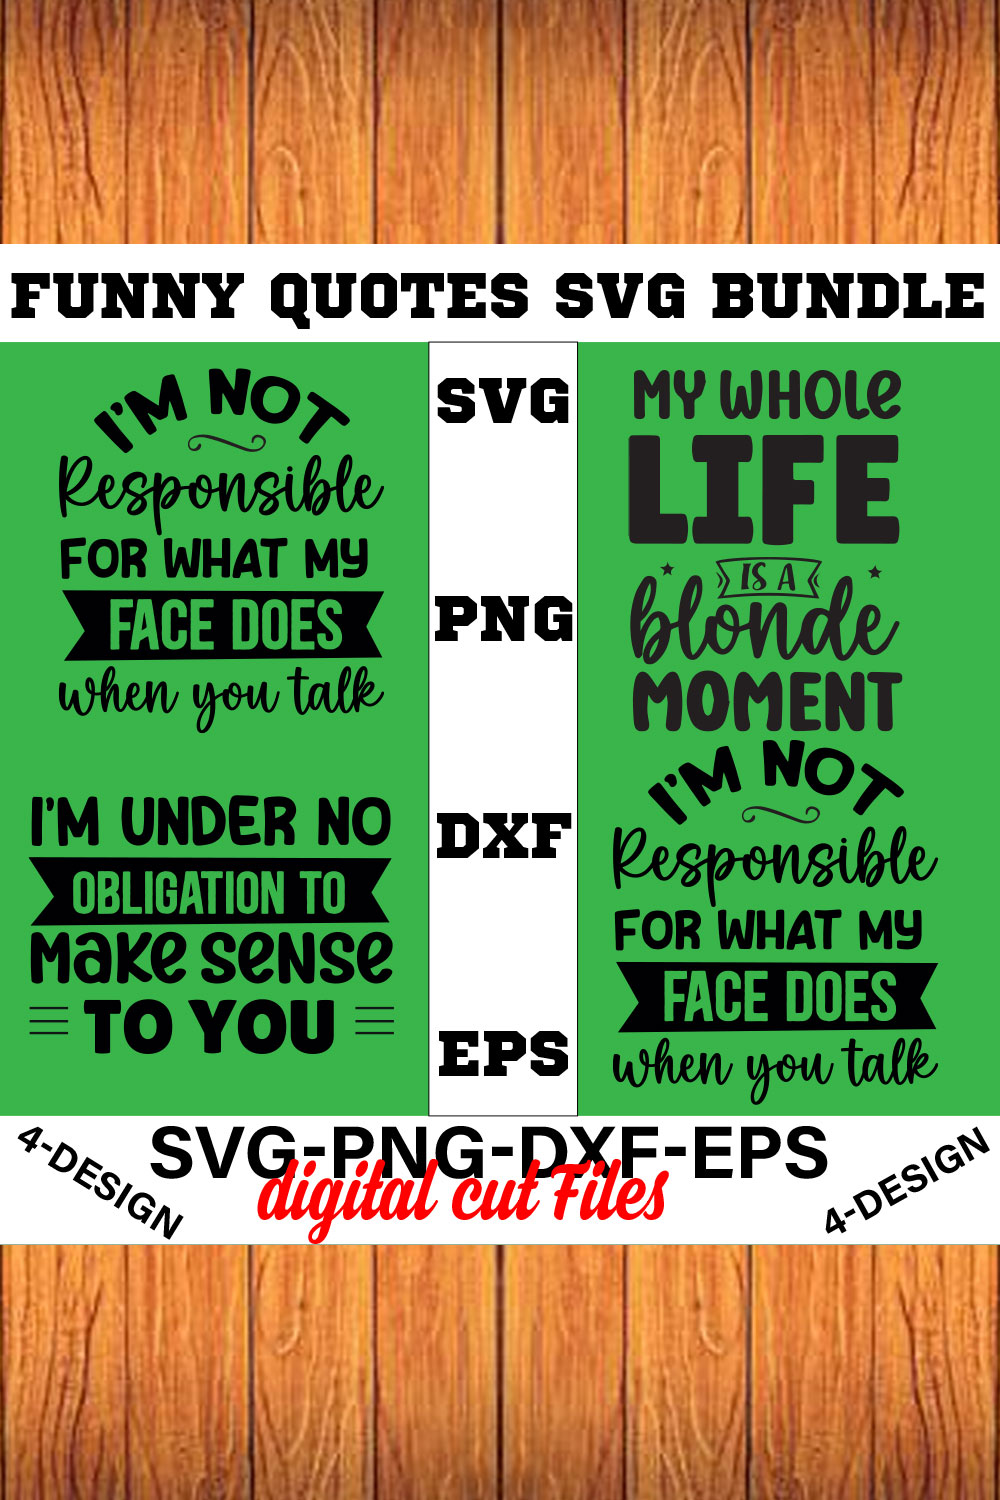 Funny Quotes SVG Bundle Vol-02 pinterest preview image.